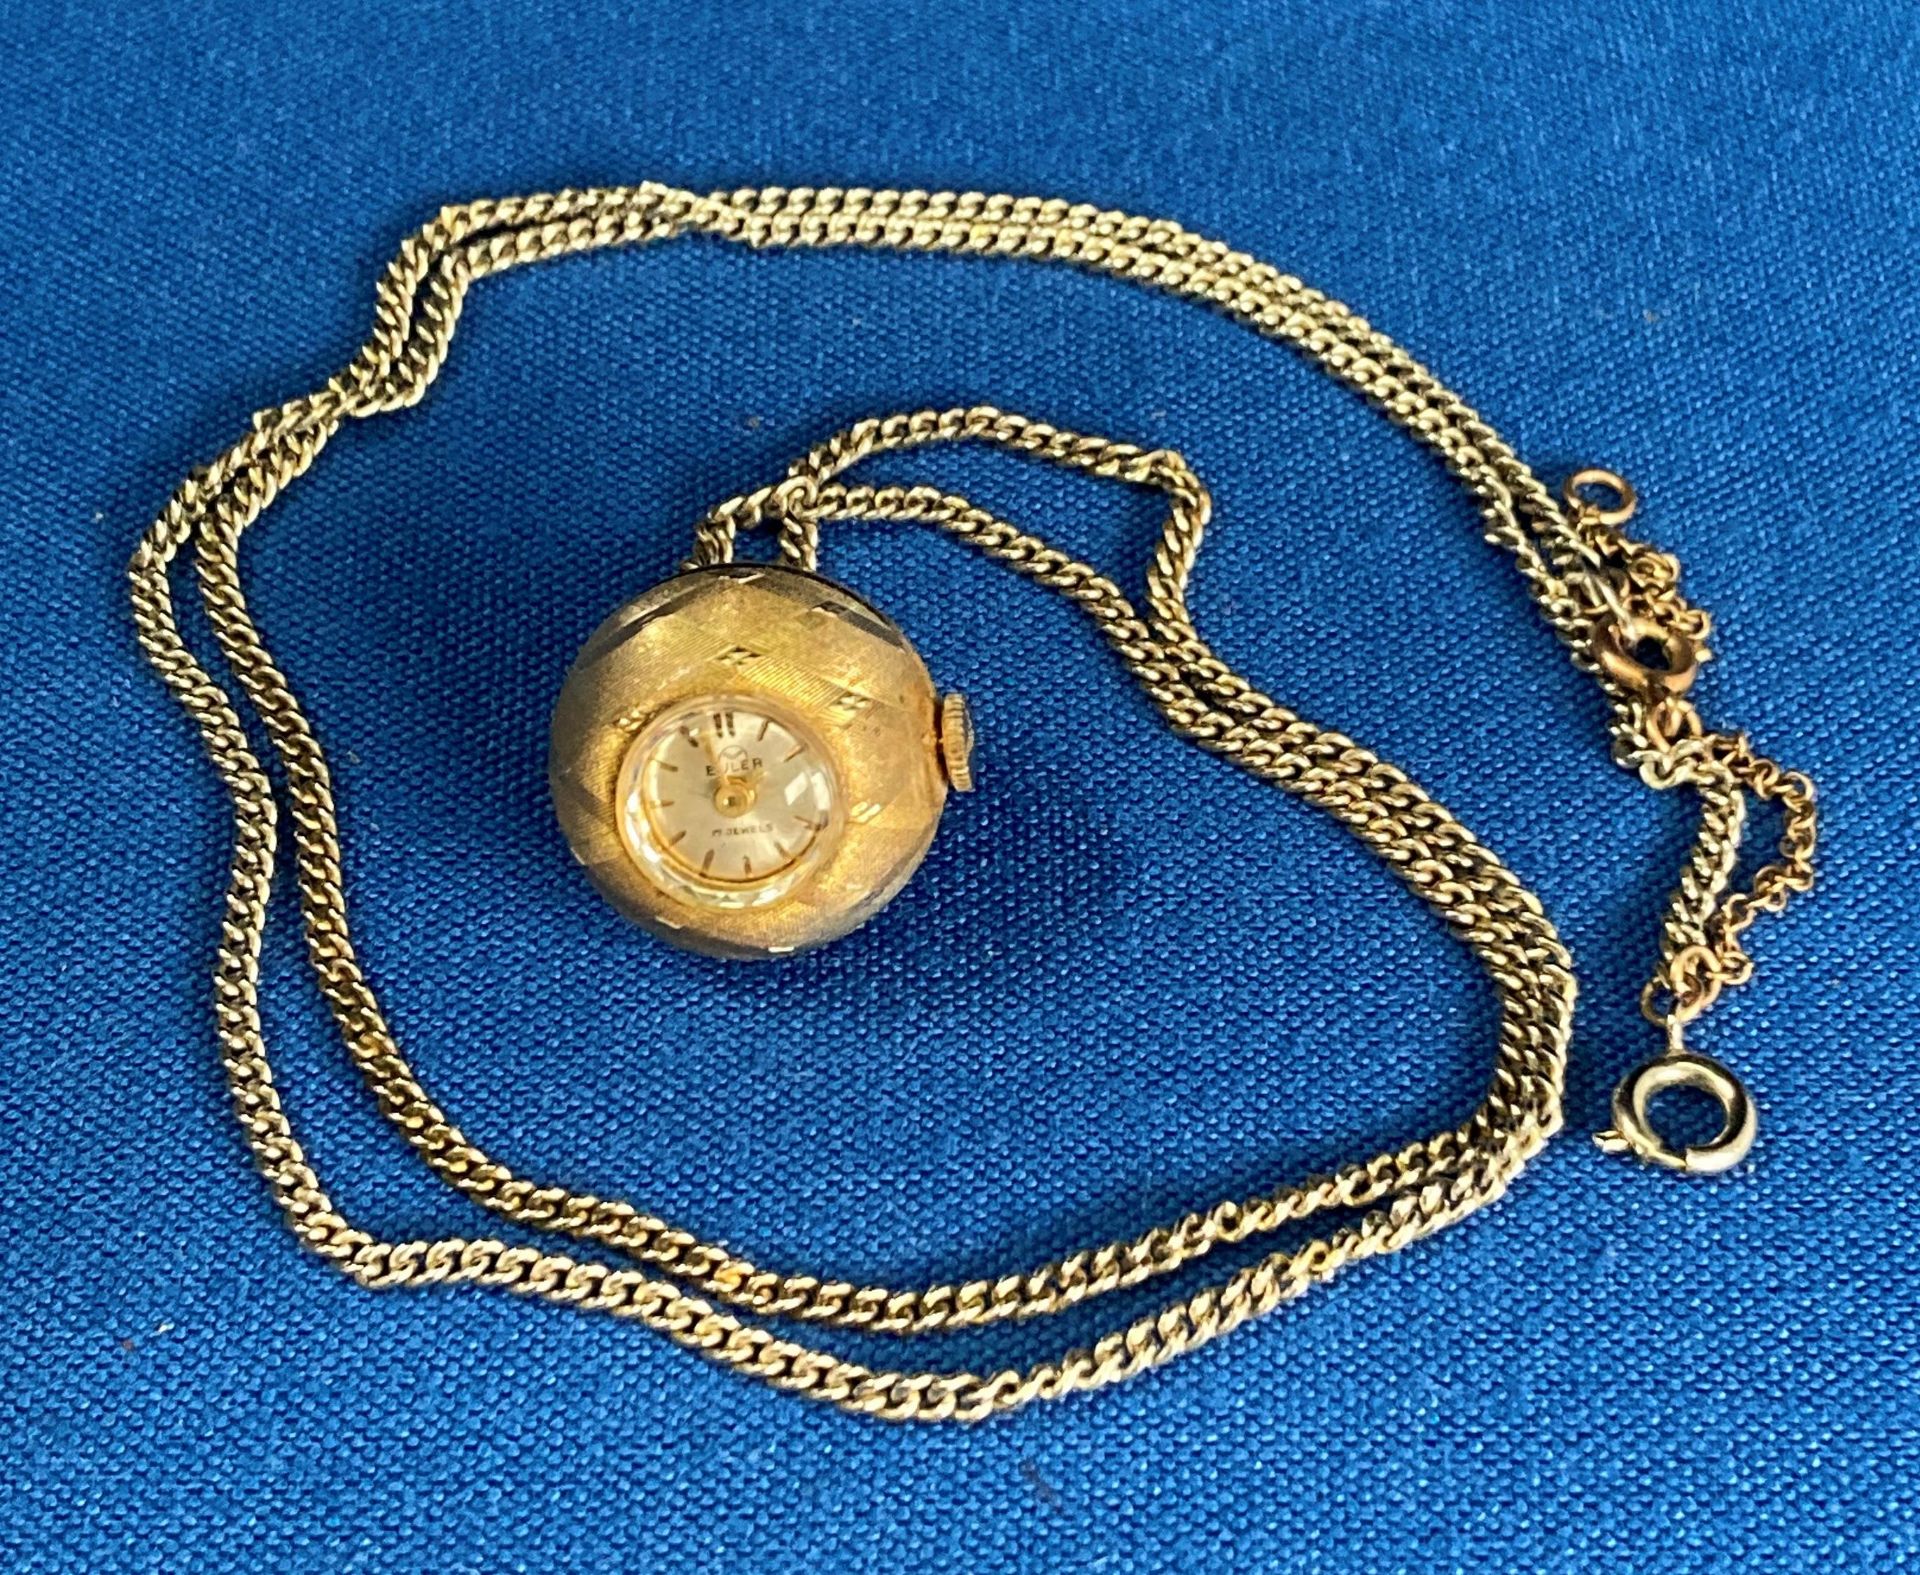 A vintage BULER pendant watch in original case (saleroom location: S3 GC3) - Image 3 of 4